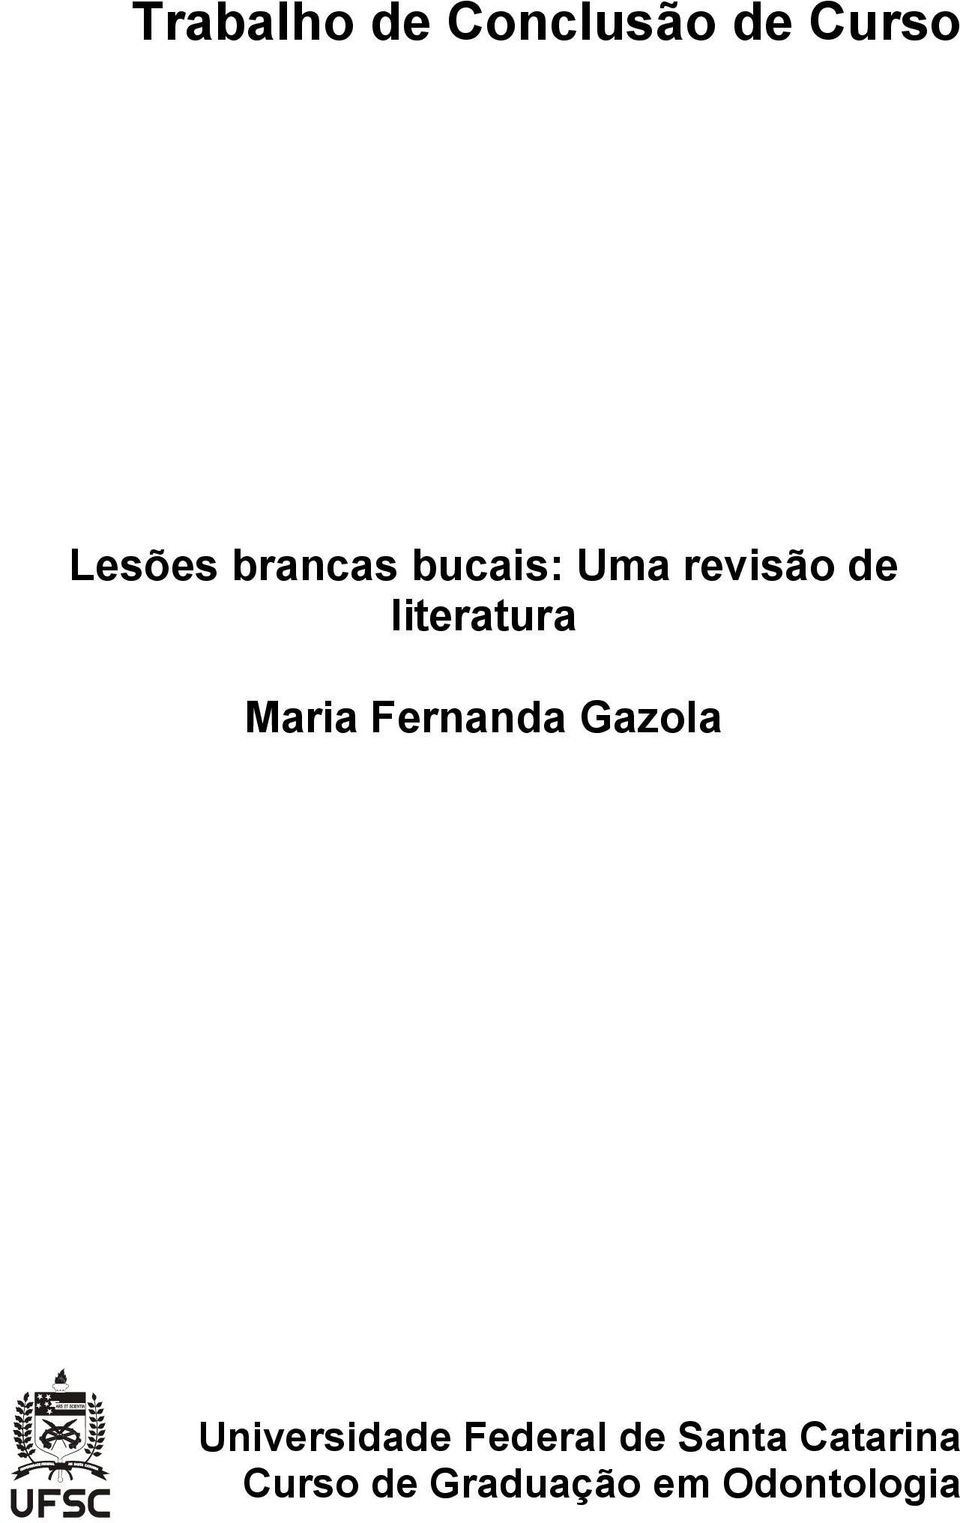 Maria Fernanda Gazola Universidade Federal